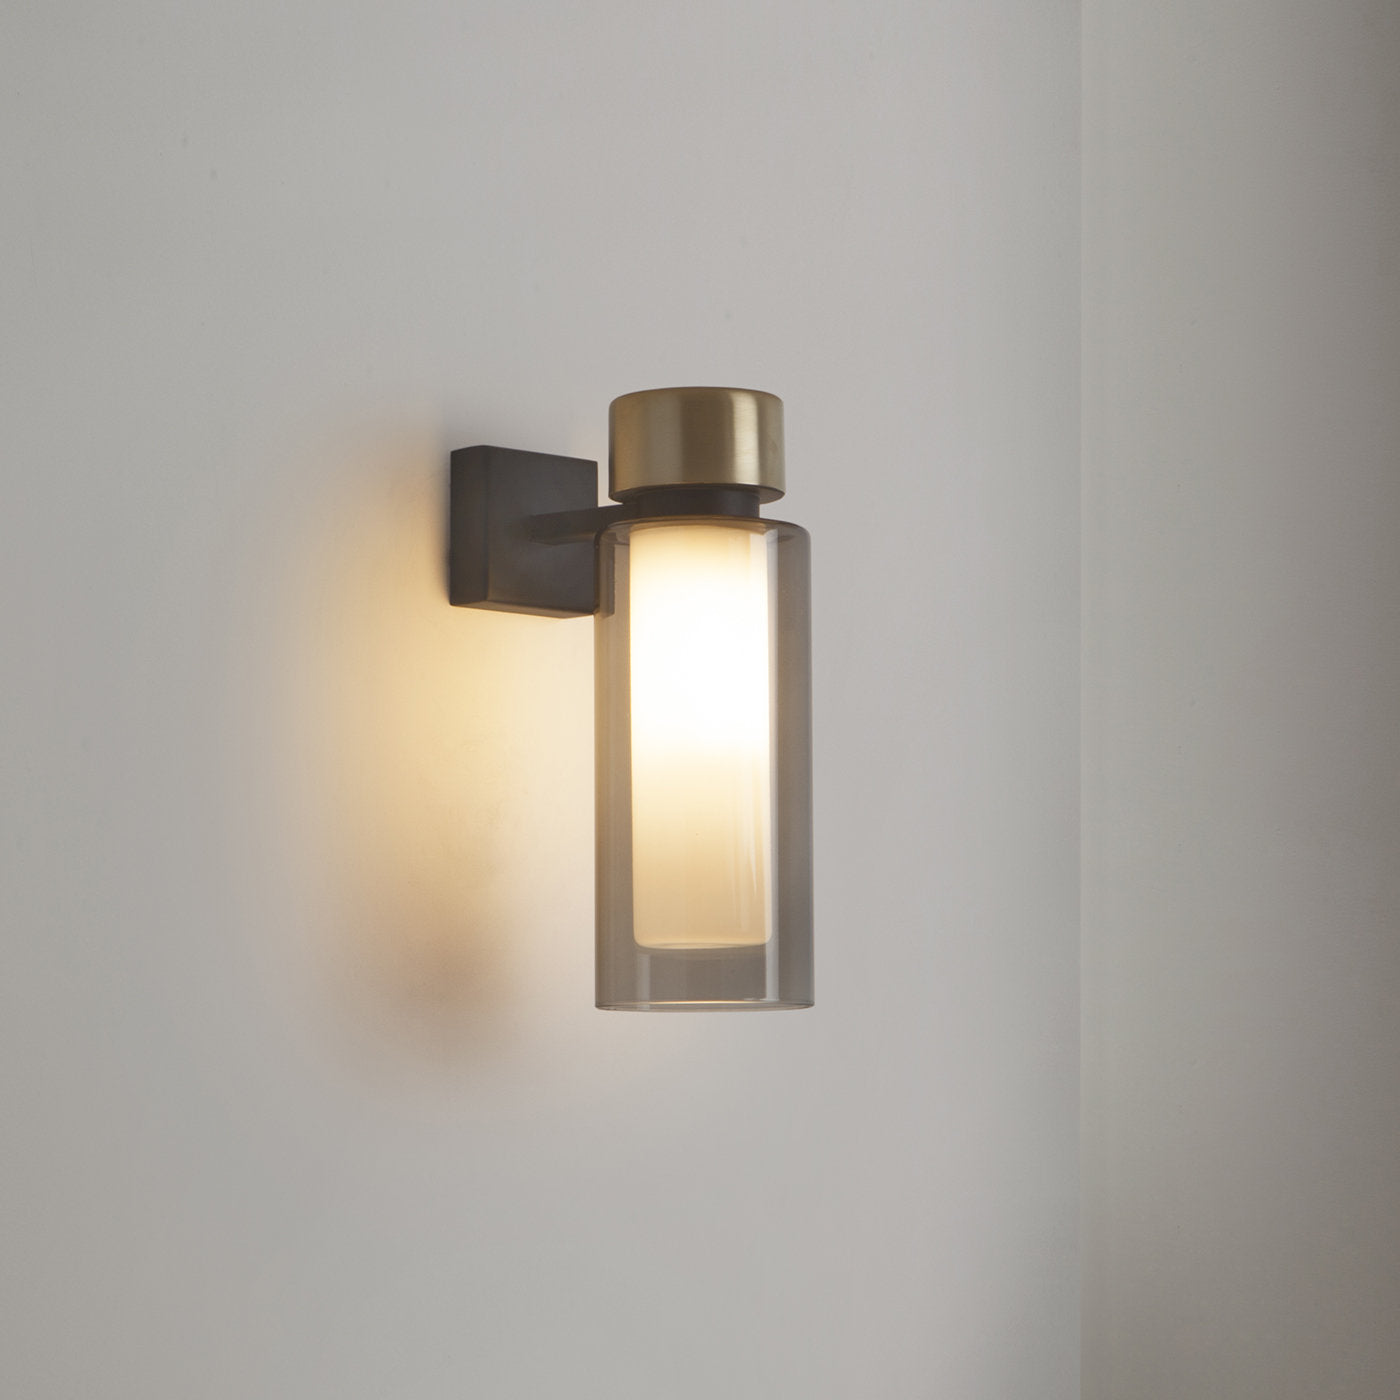 Osman Single Wall Lamp by Corrado Dotti - Alternative view 2